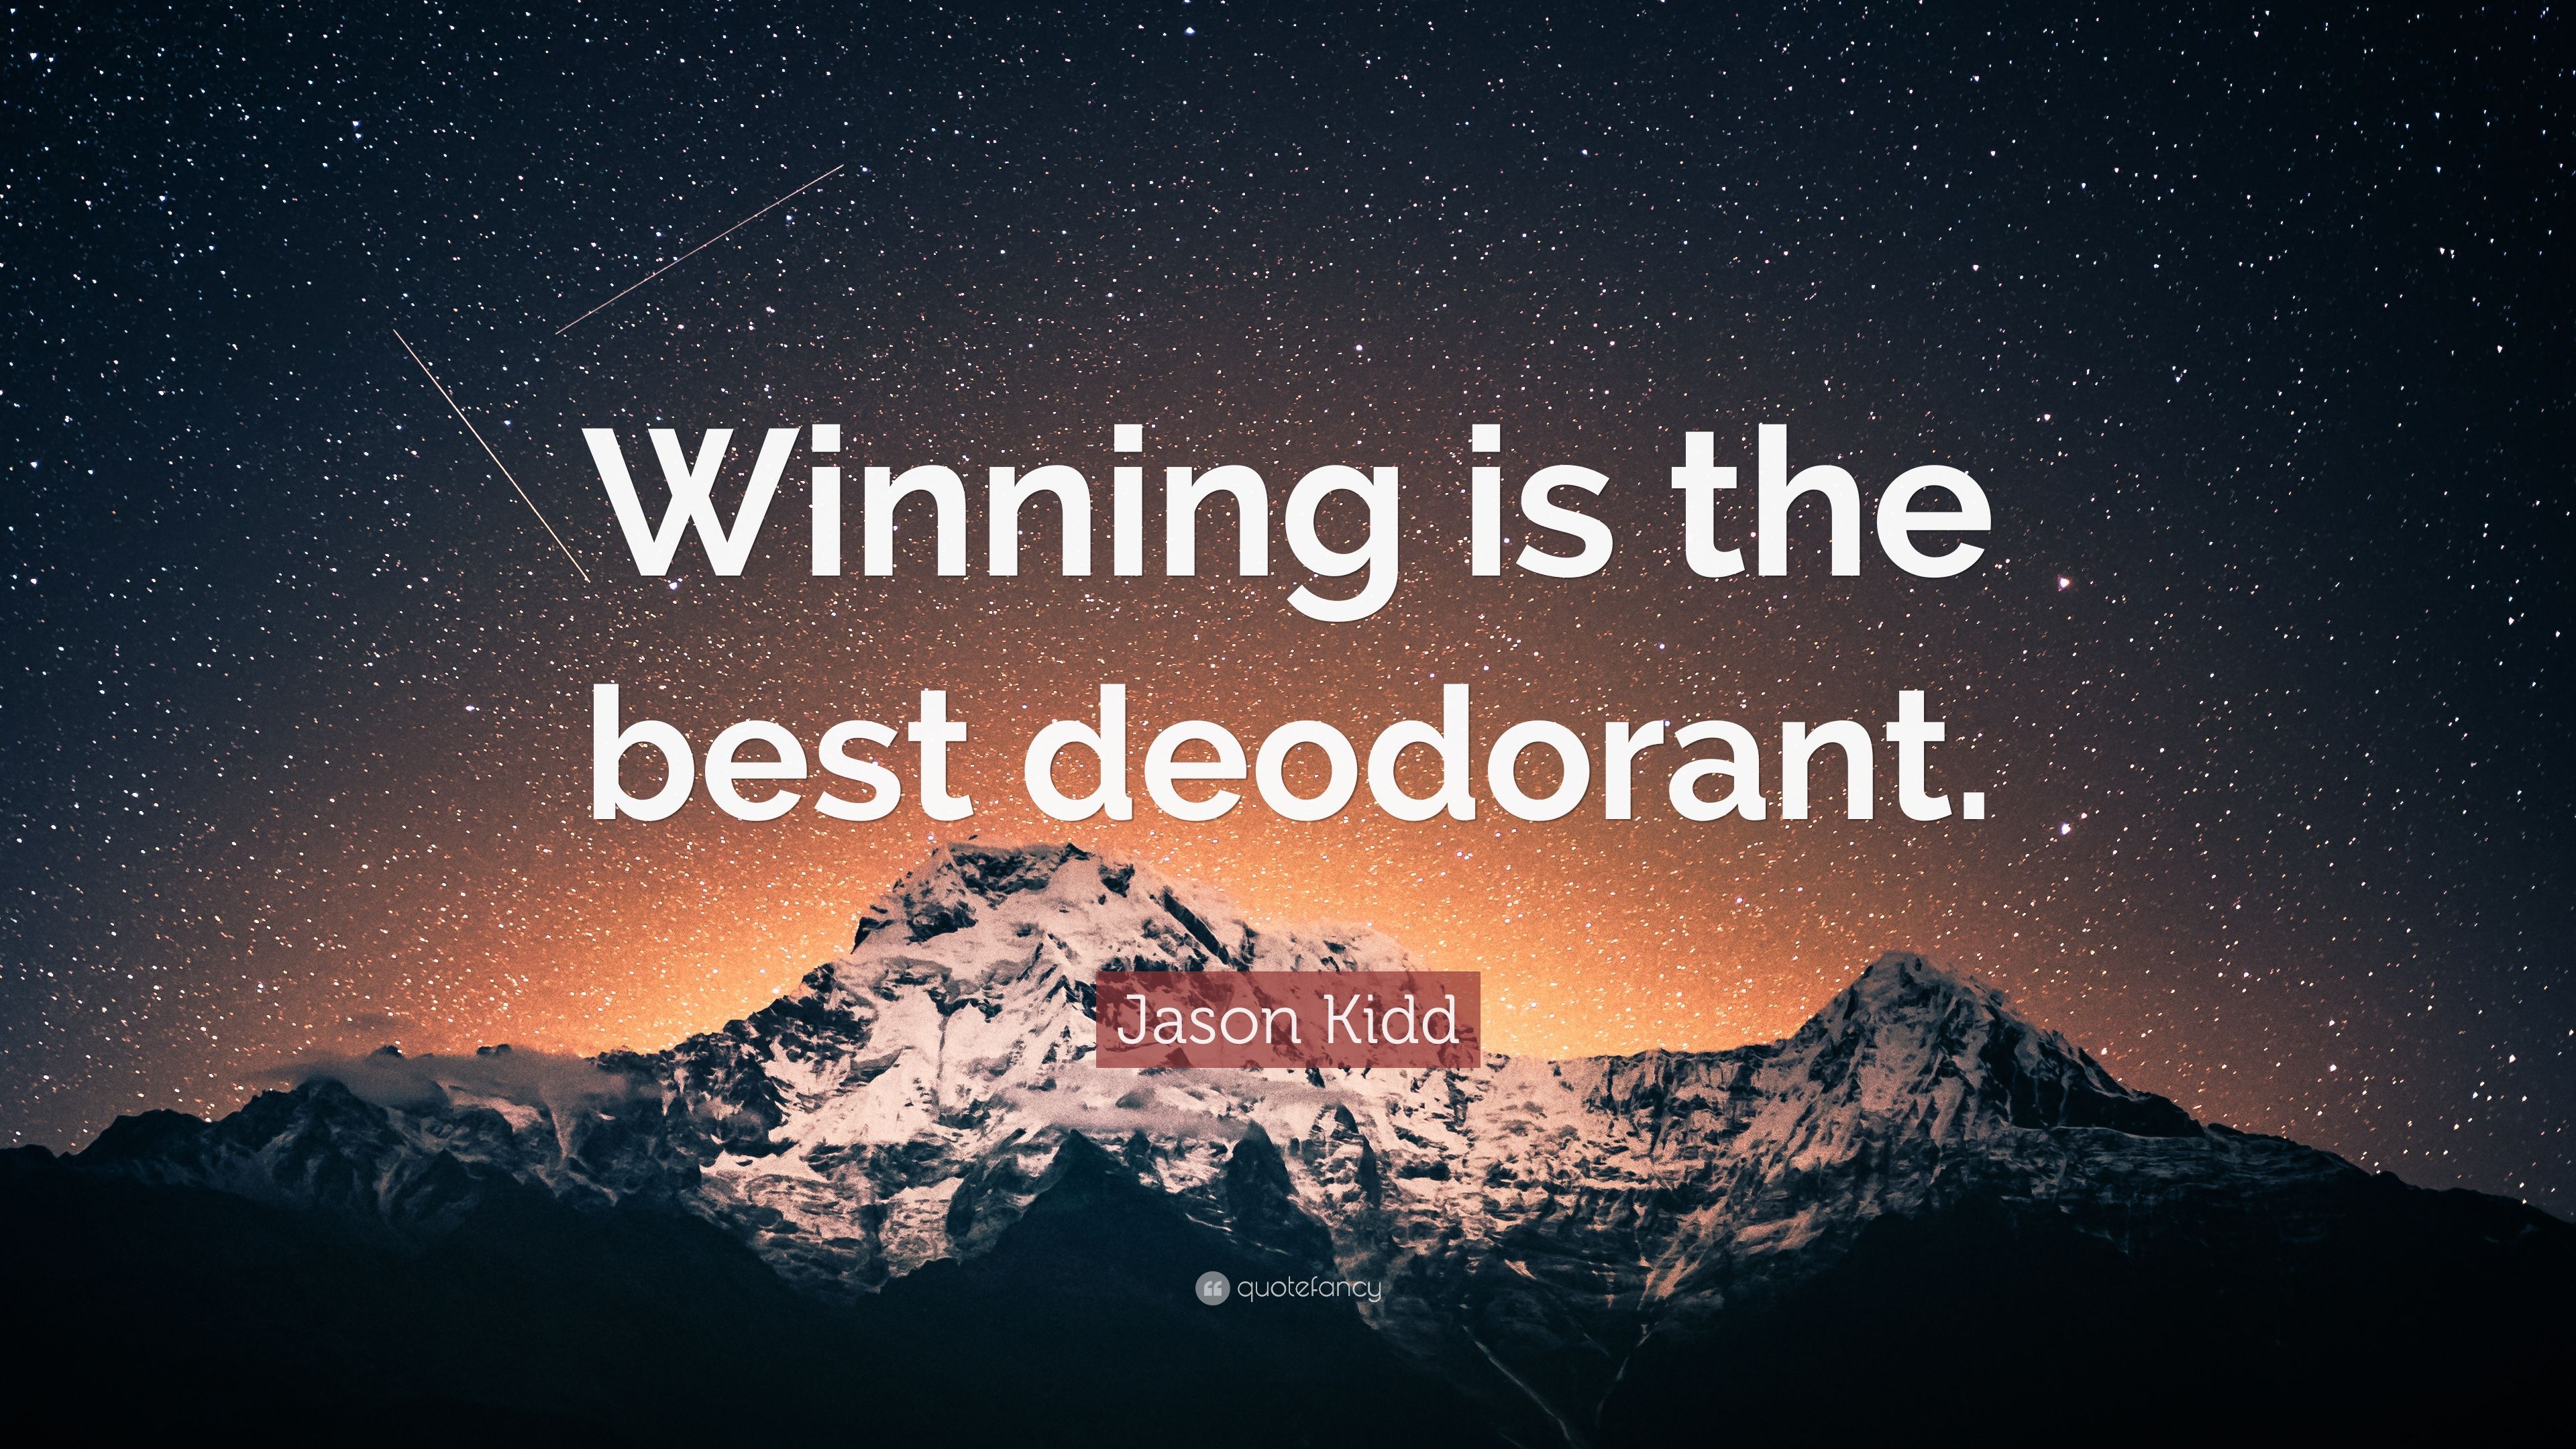 Jason Kidd Quote: “Winning is the best deodorant.” 7 wallpaper